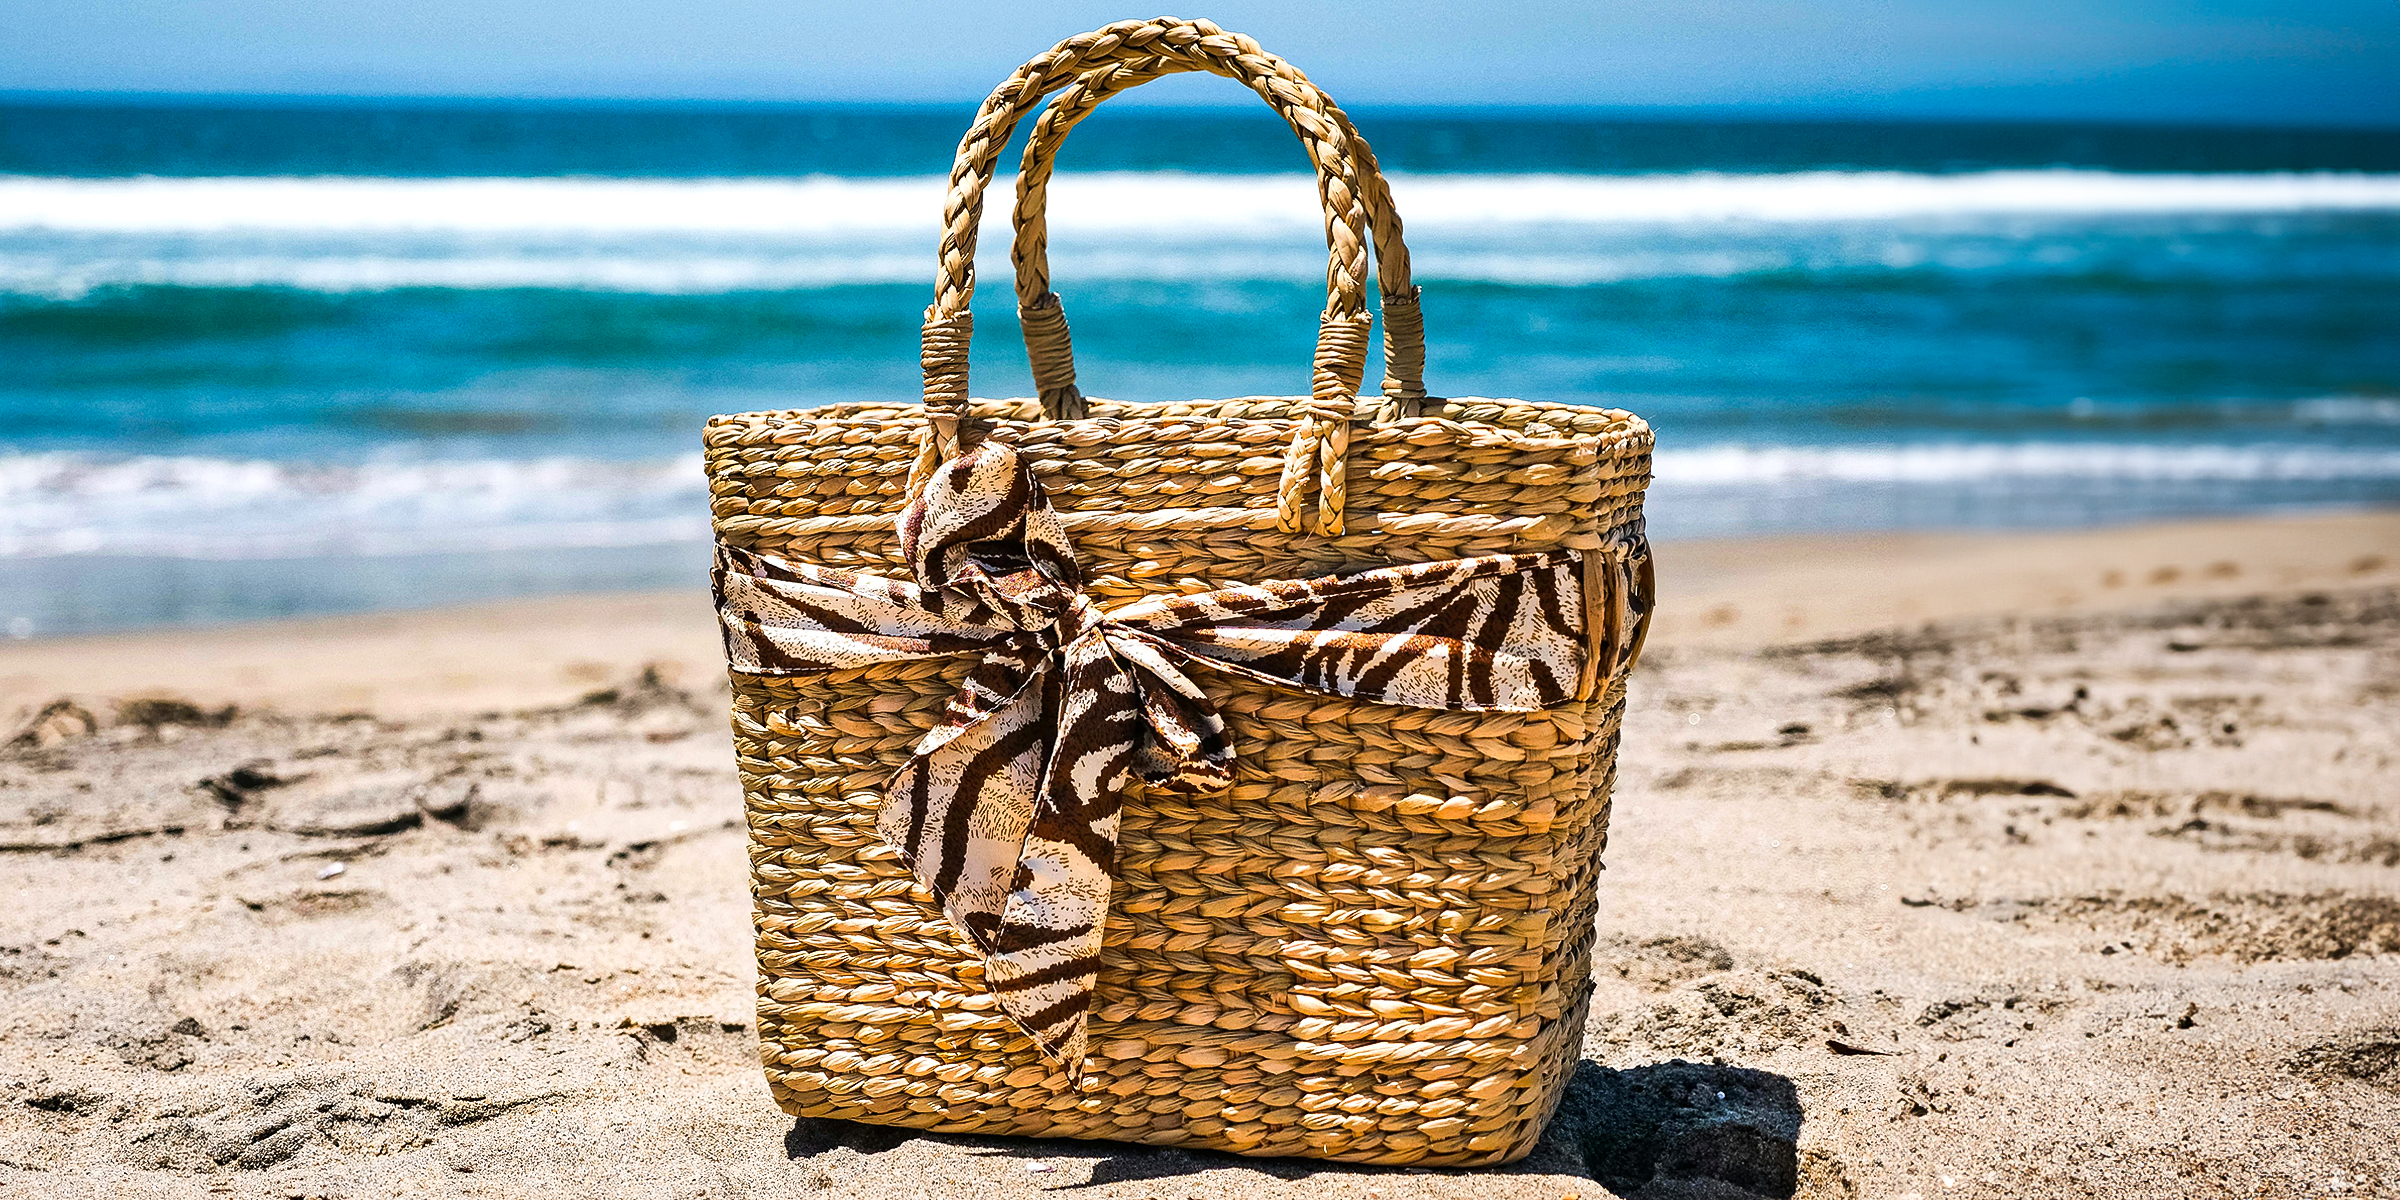 A beach bag with a ribbon | Source: Pexels